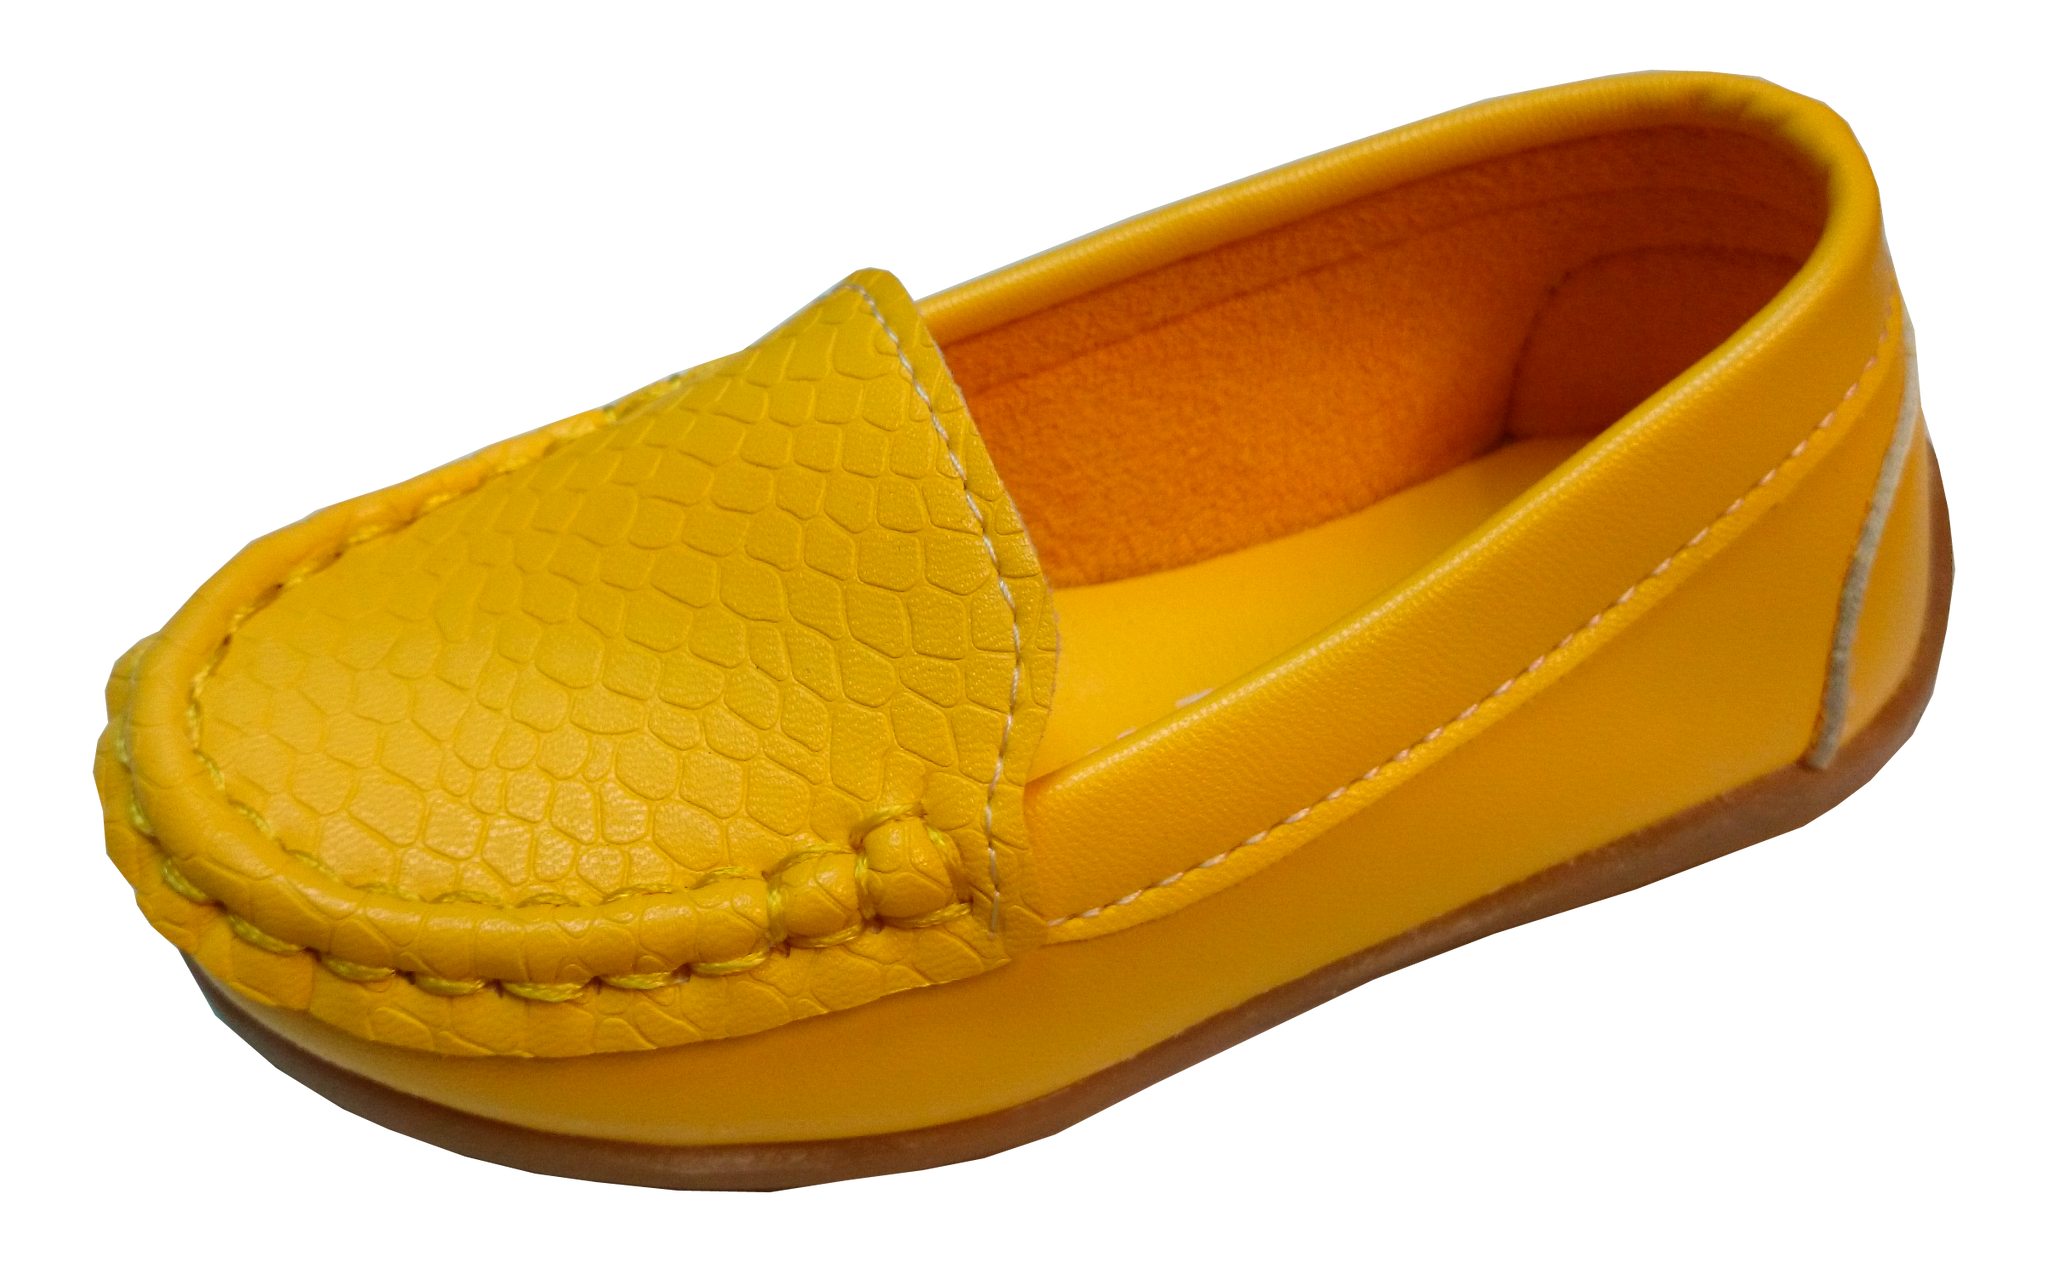 S168 Moccasin Softee Yellow EU21-30